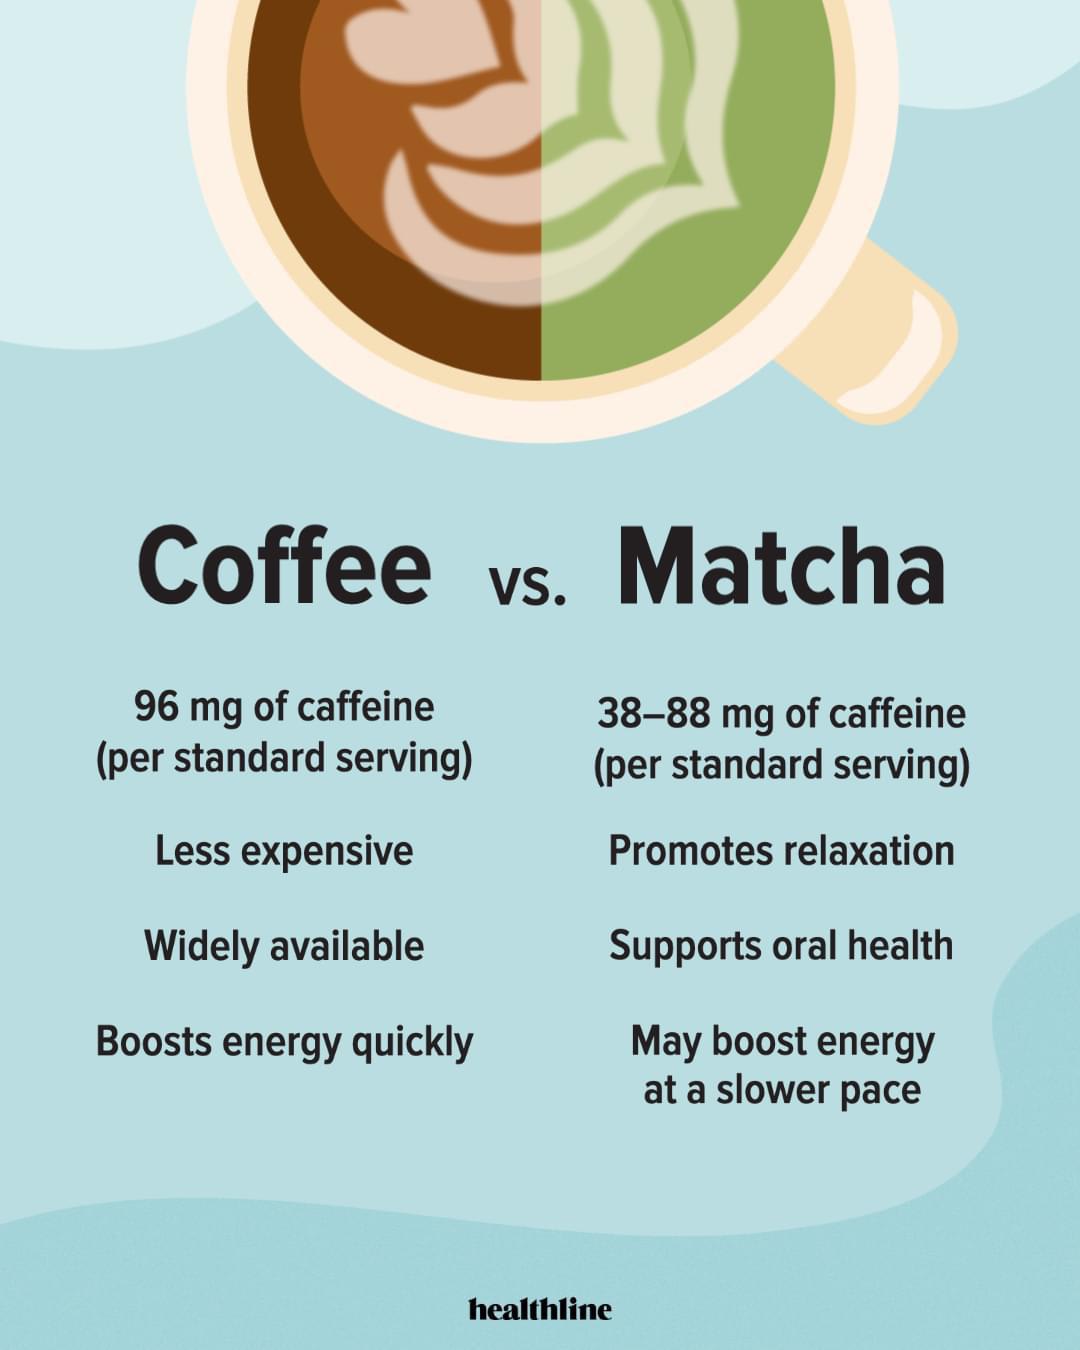 Coffee vs Matcha benefits (by Healthline)